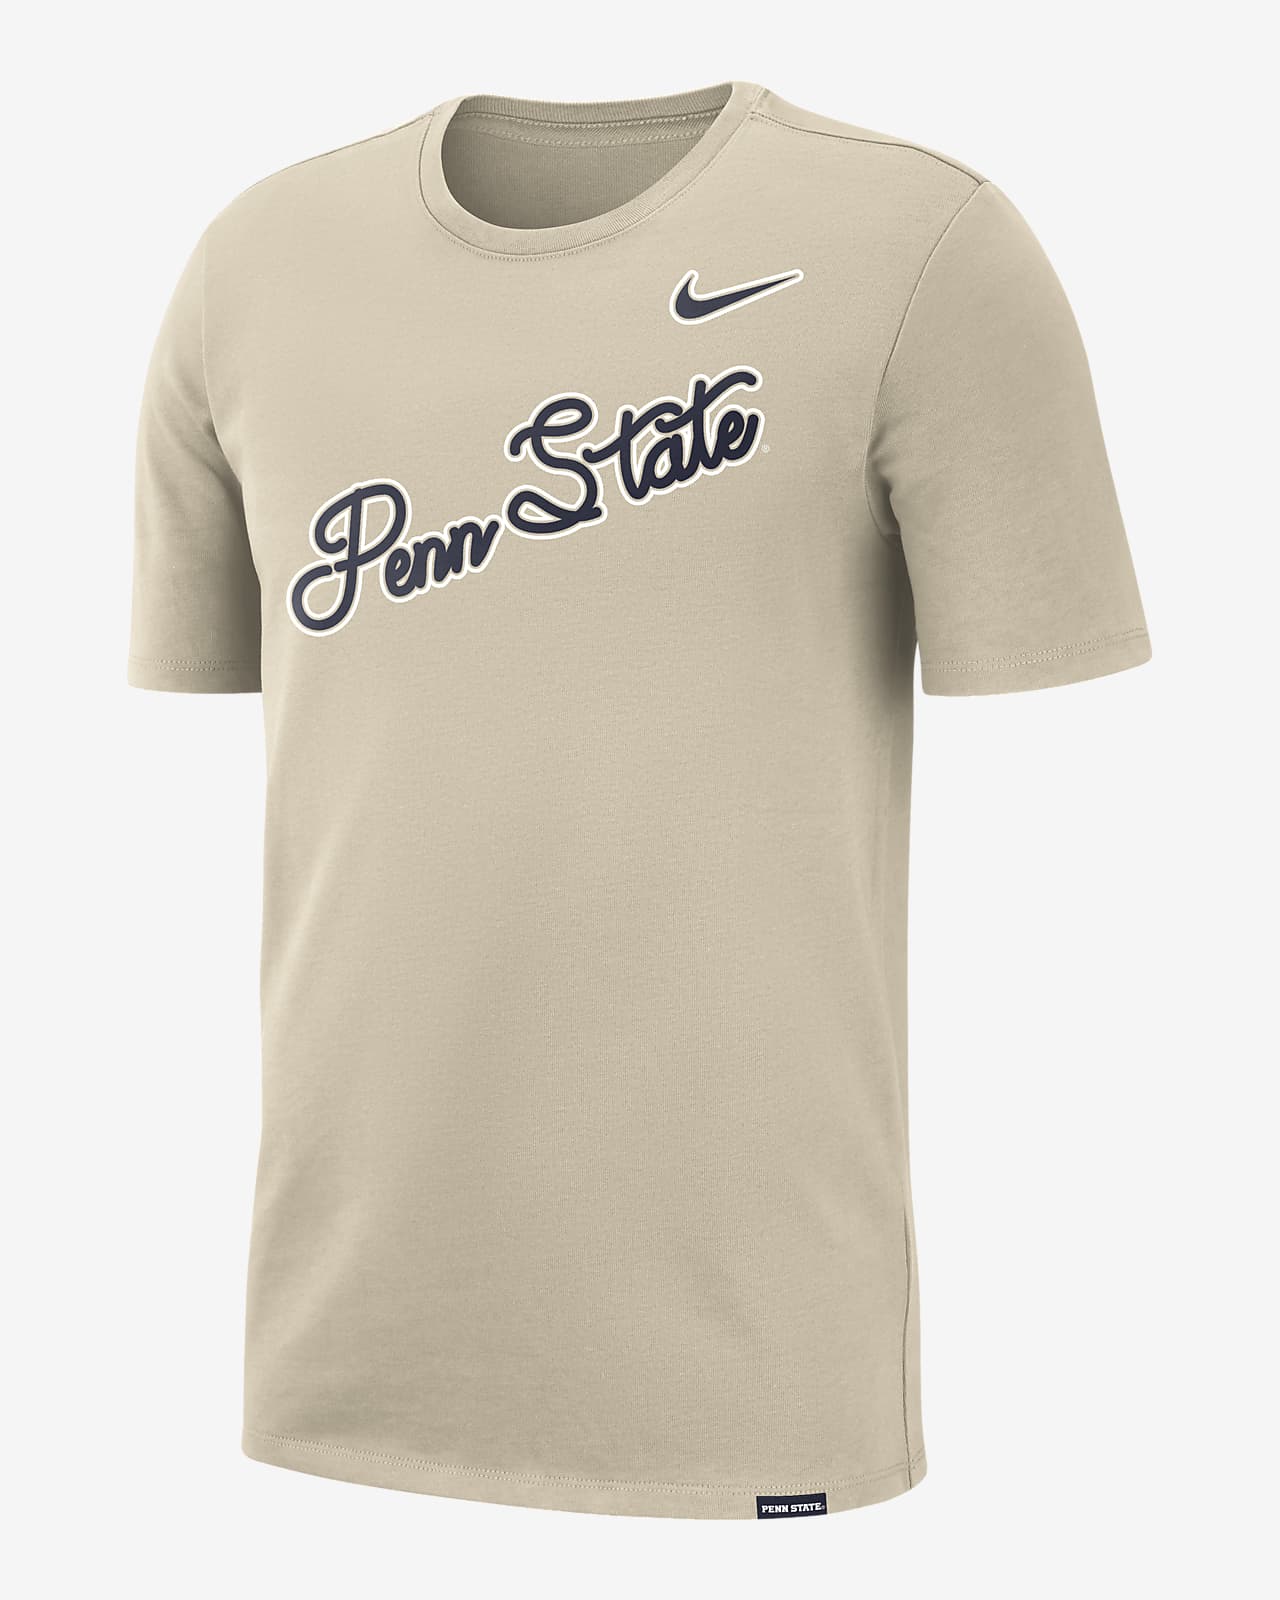 Penn State Tennis Nike Women's Top S NCAA